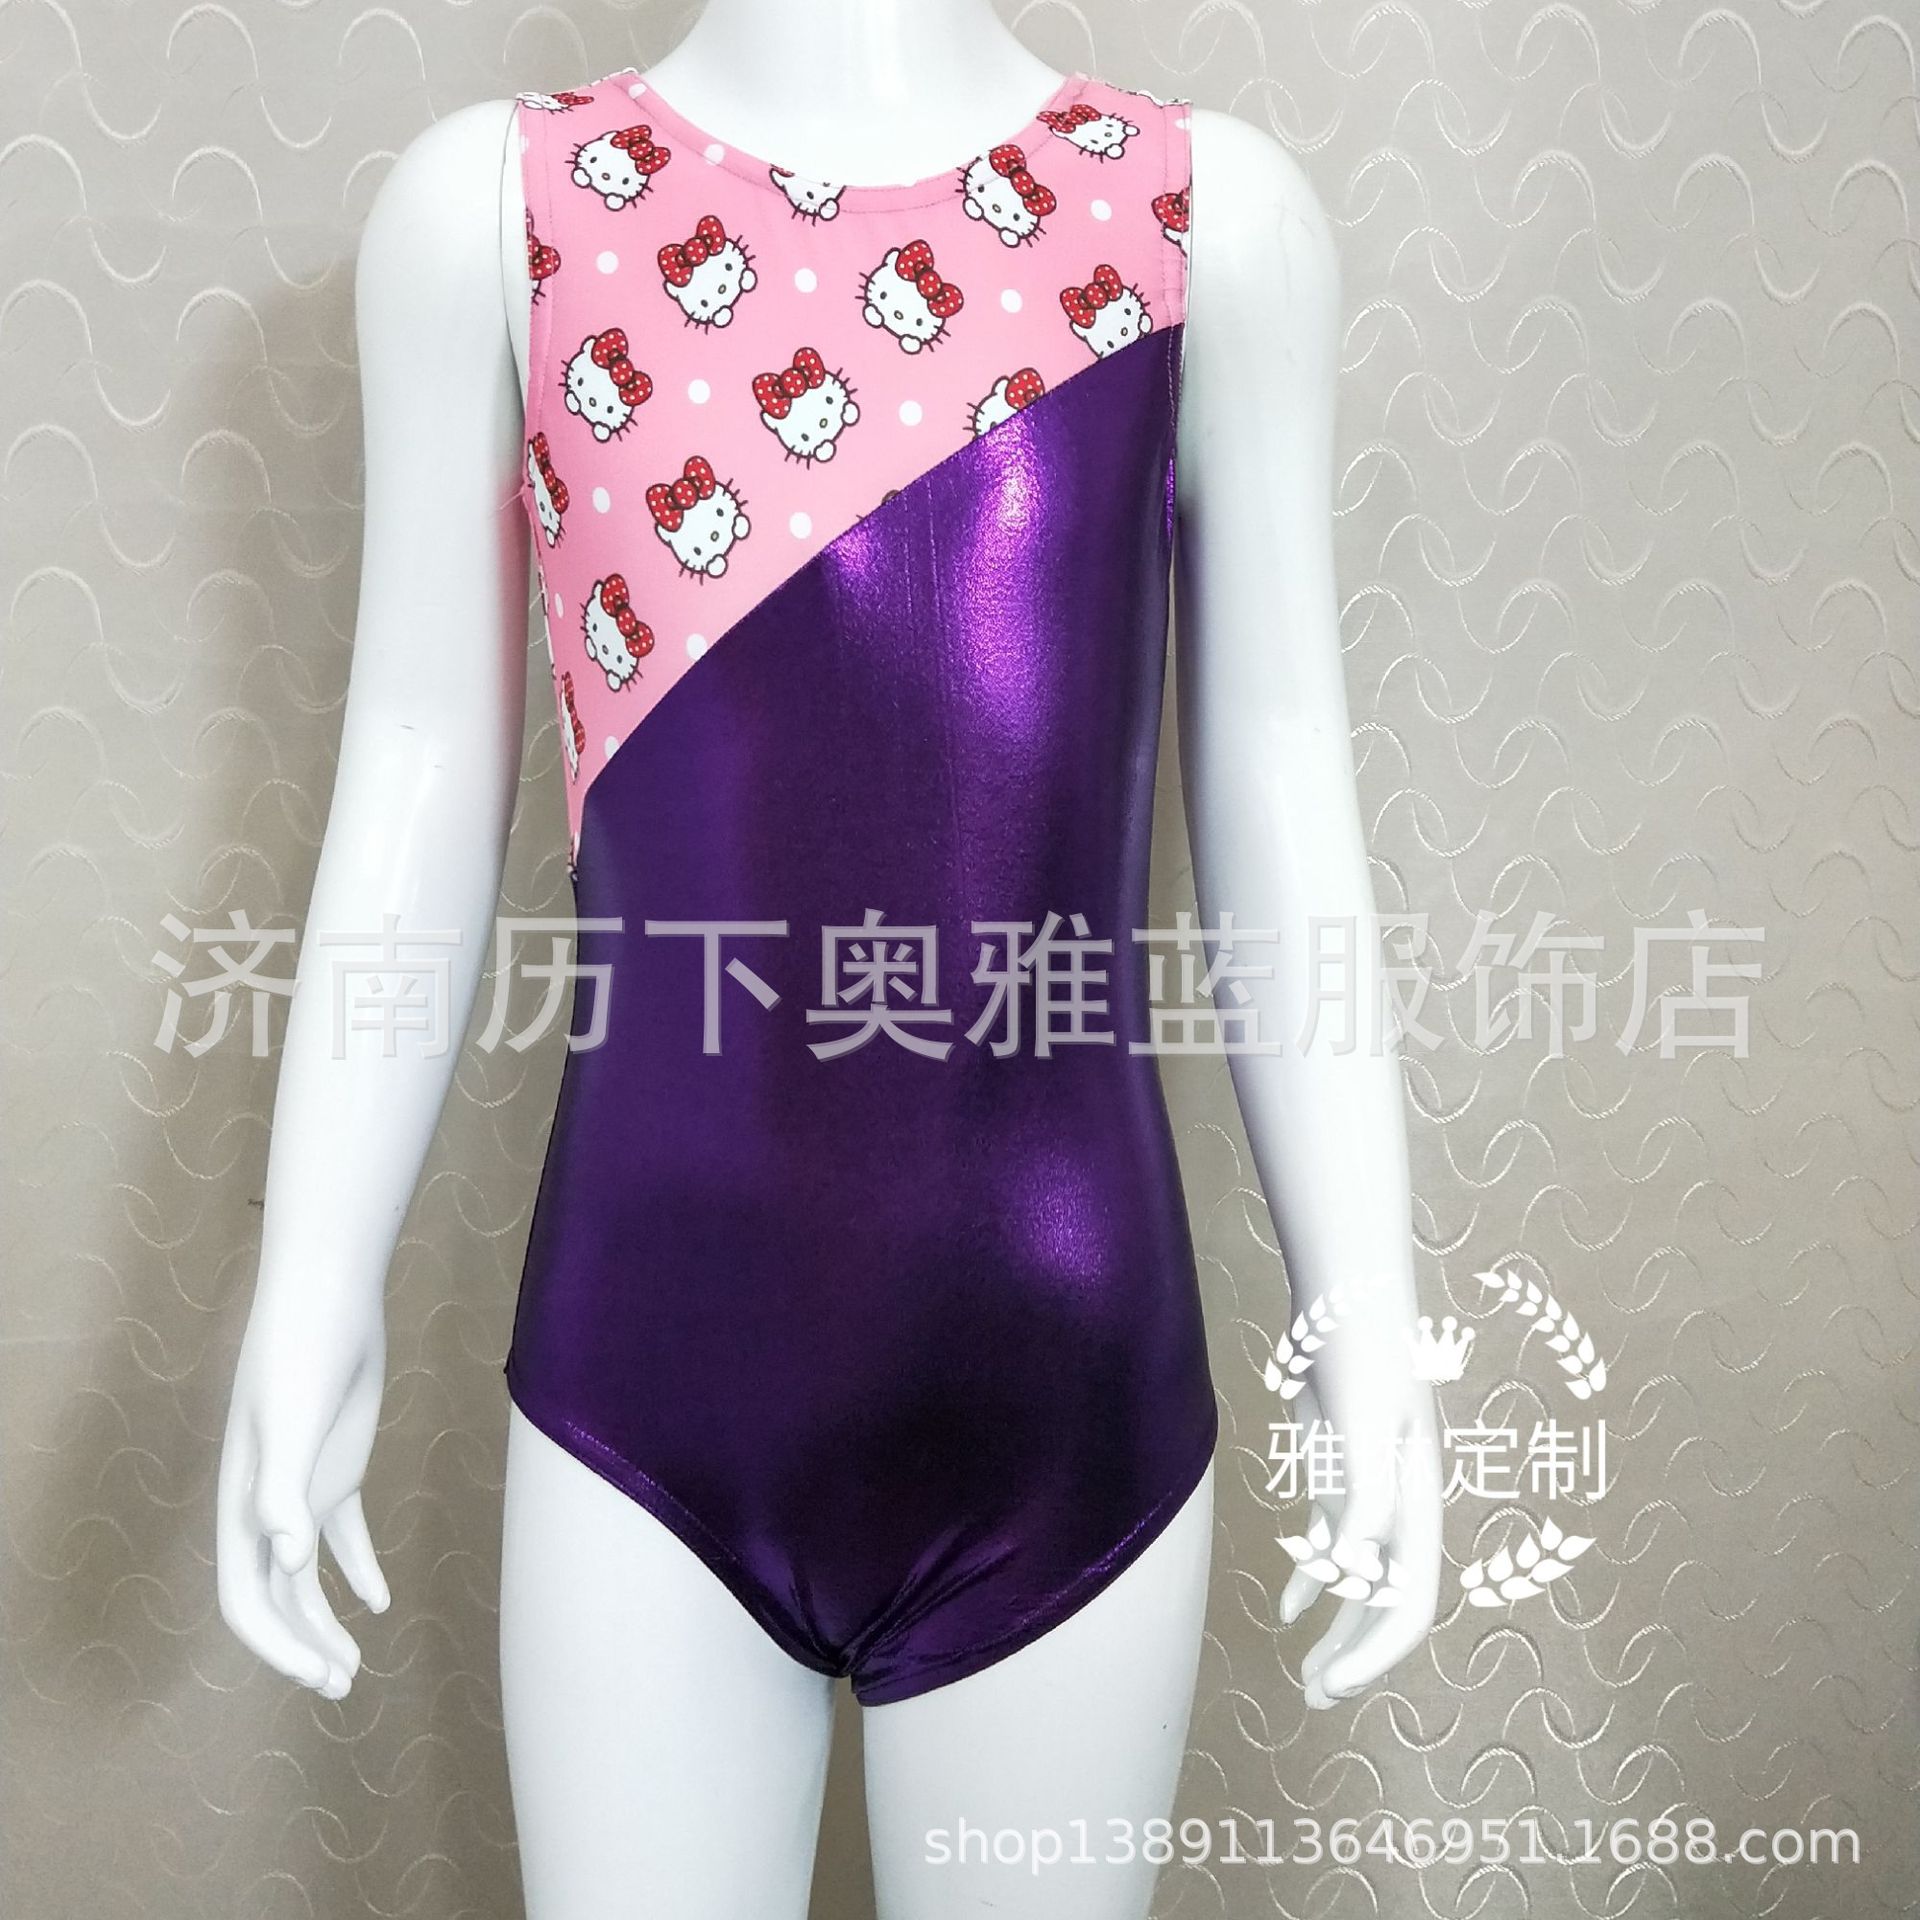 Yalin customized children Sports Aerobics Art Leotard Uniforms Swimsuit Costume